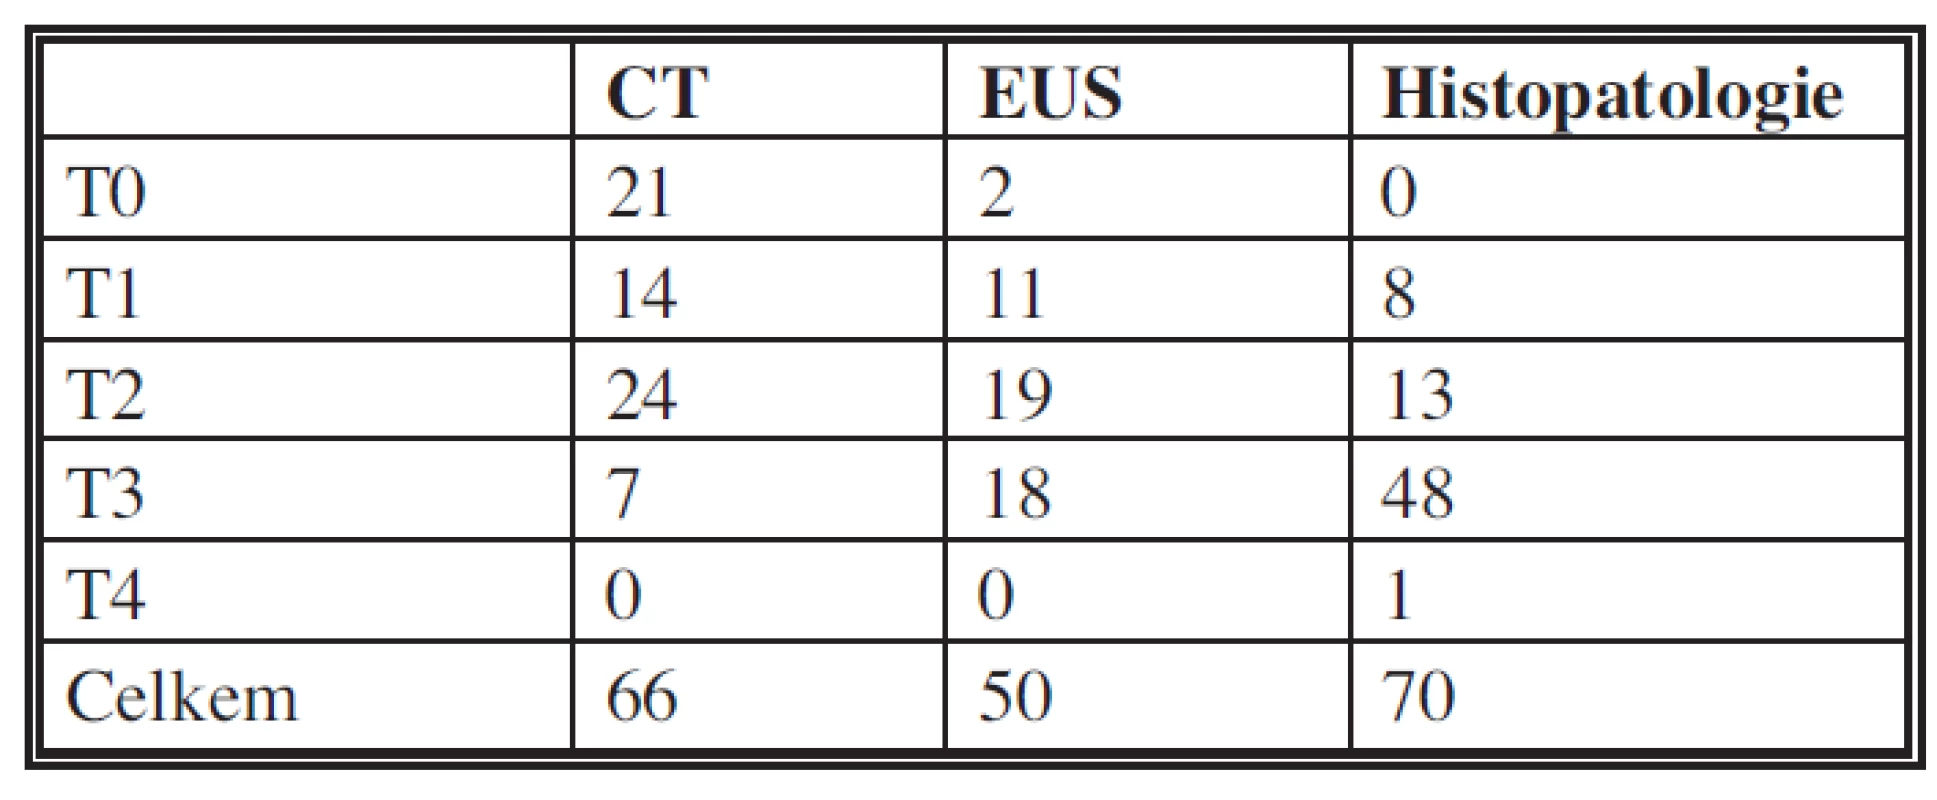 Porovnání CT, EUS a histopatologického nálezu
Tab. 3: Comparison of CT, EUS and histopathological findings